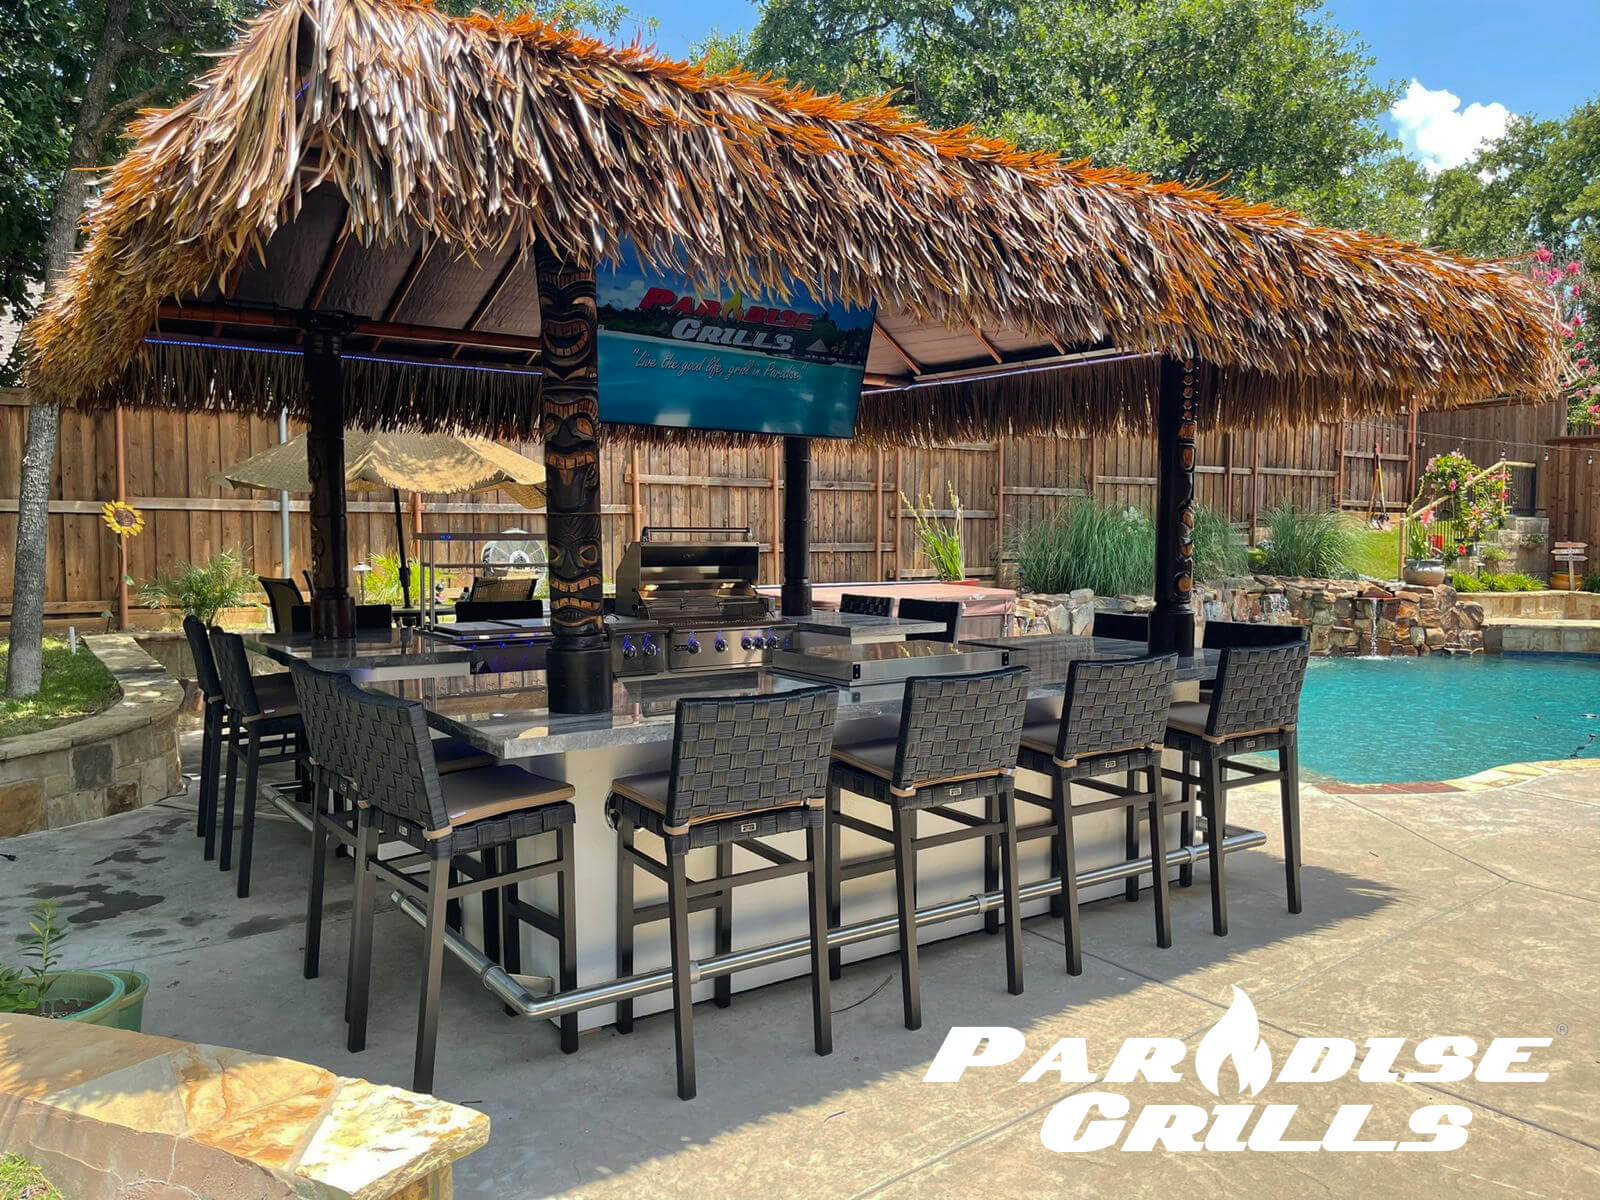 Paradise Grills - Outdoor Kitchen Builder Texas